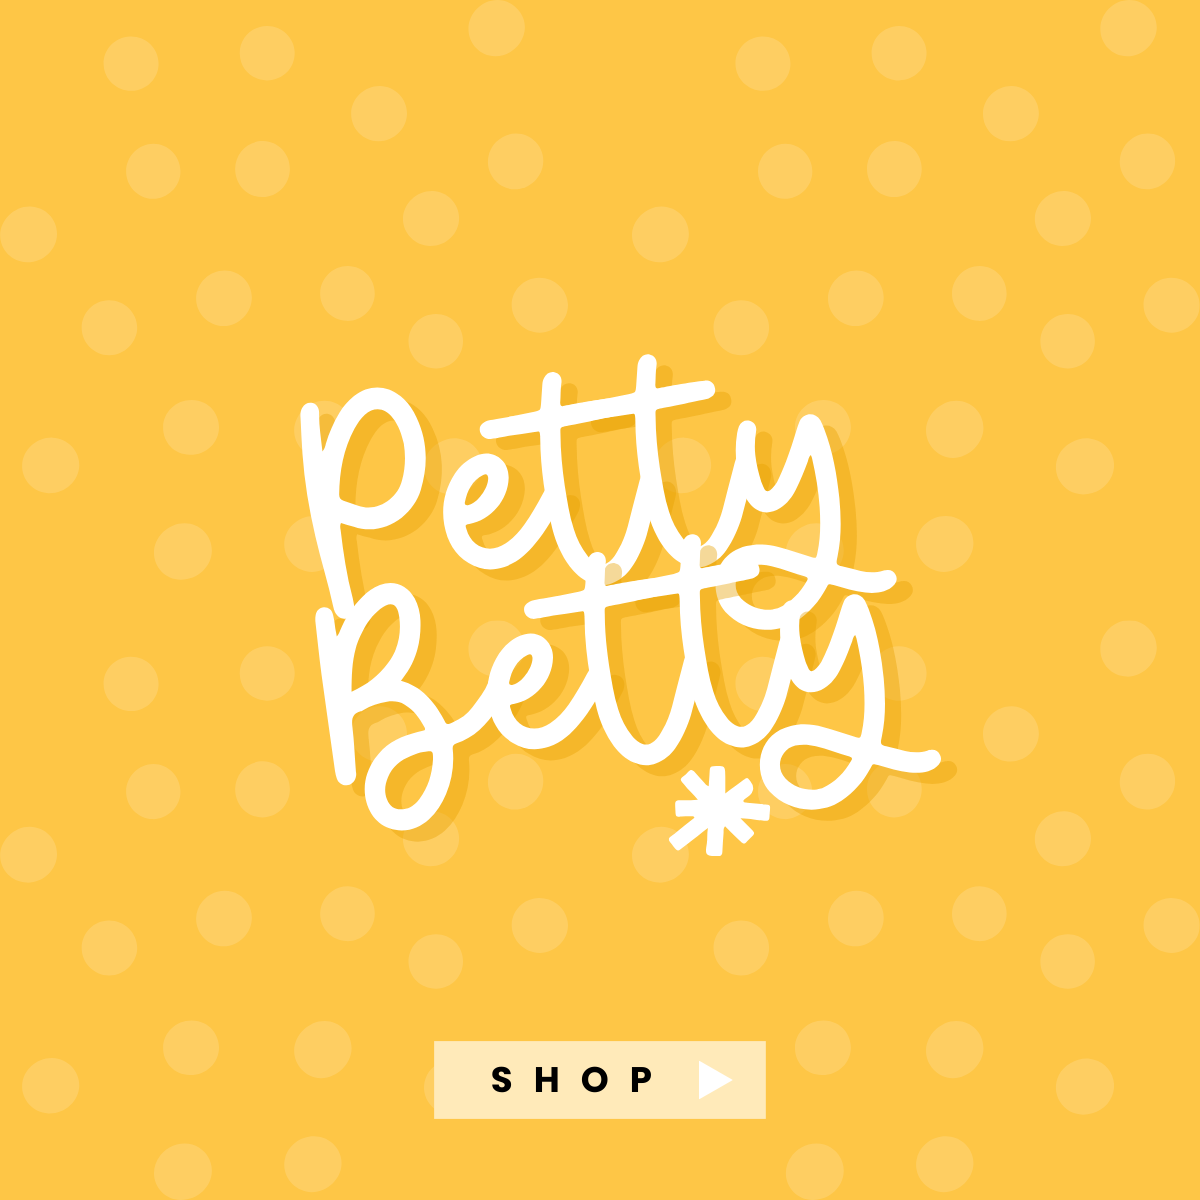 Petty Betty's